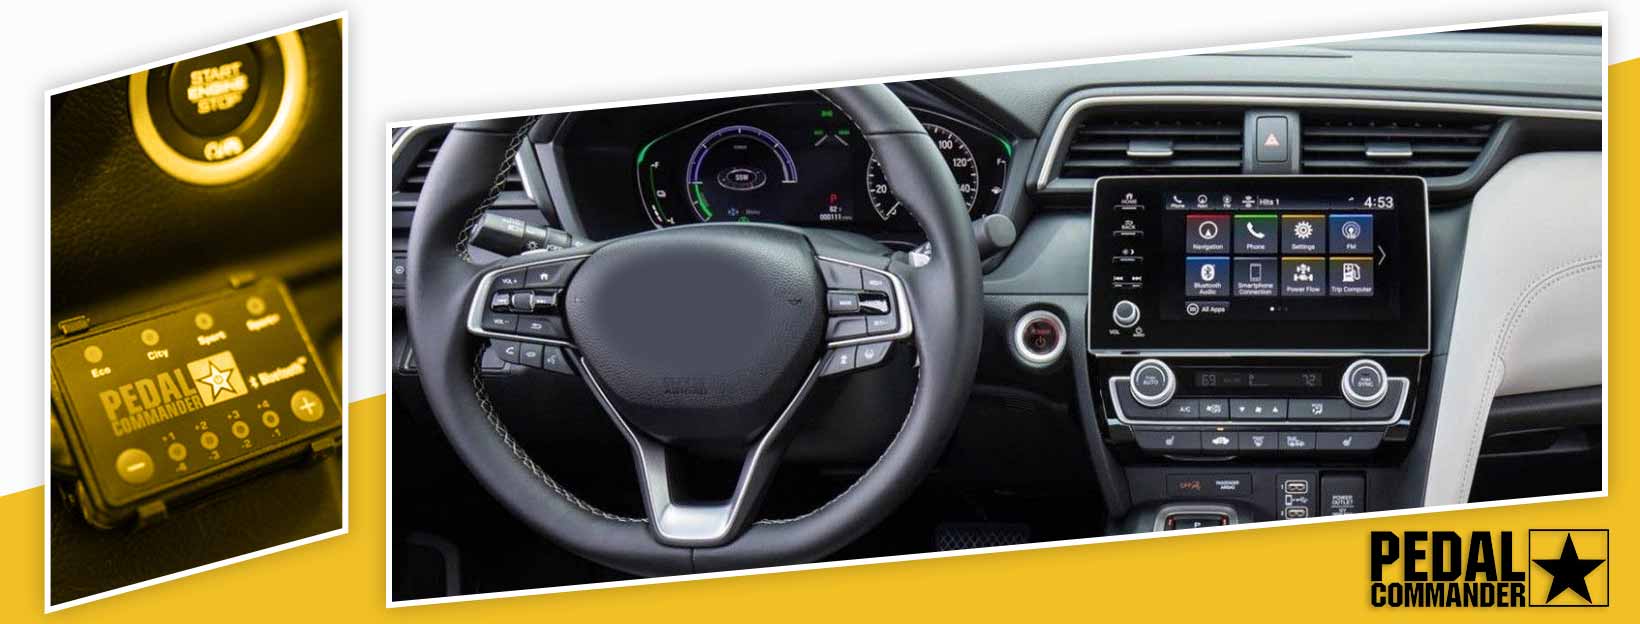 Pedal Commander for Honda Insight - interior